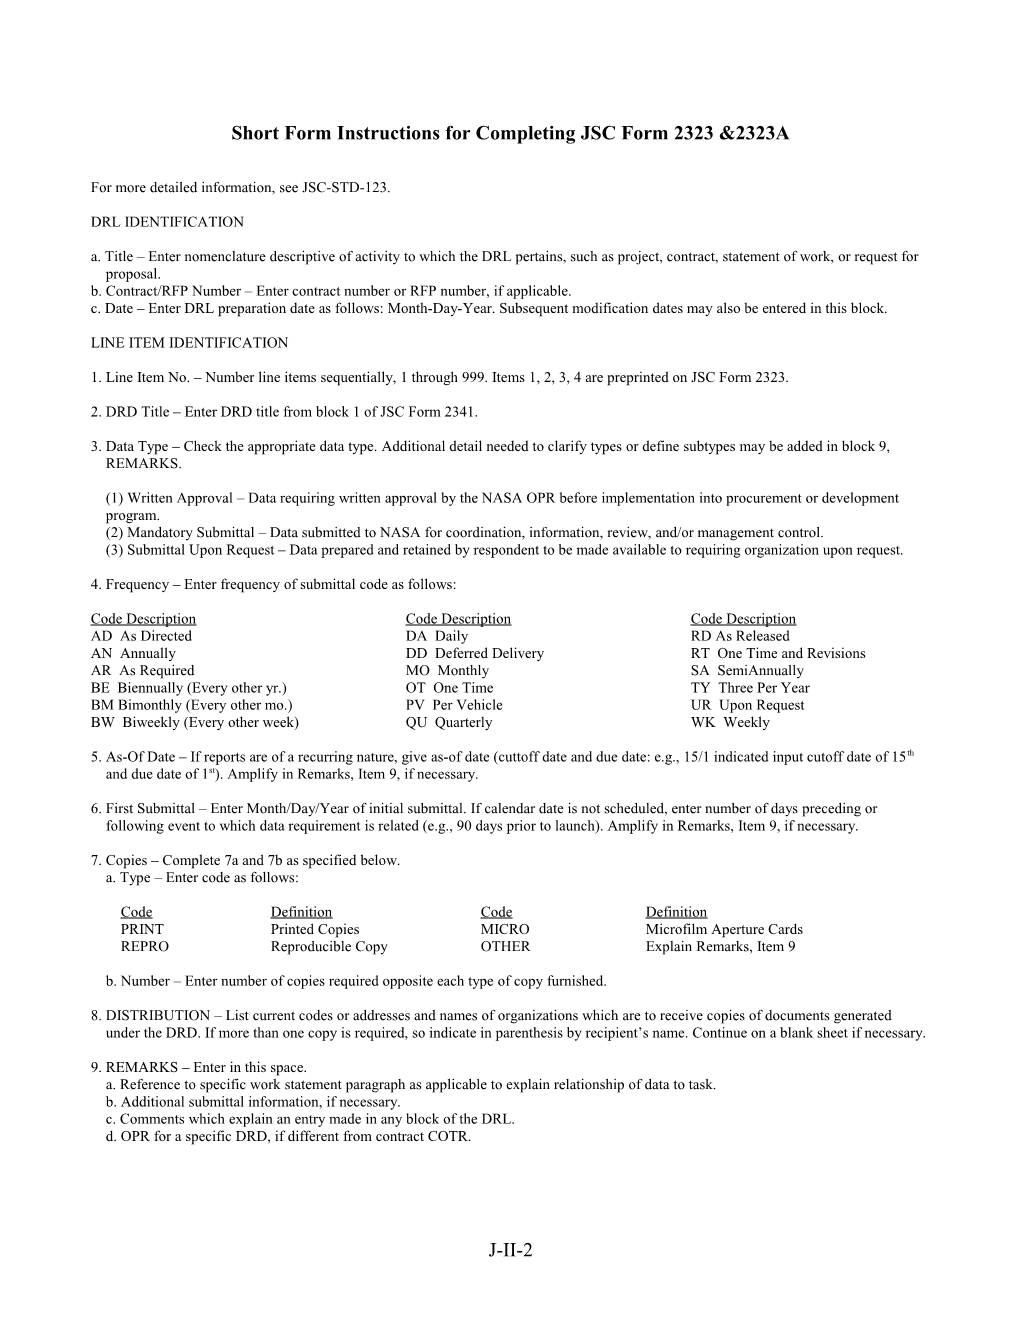 Jsc Data Requirements List (Drl) Nas 9-19100